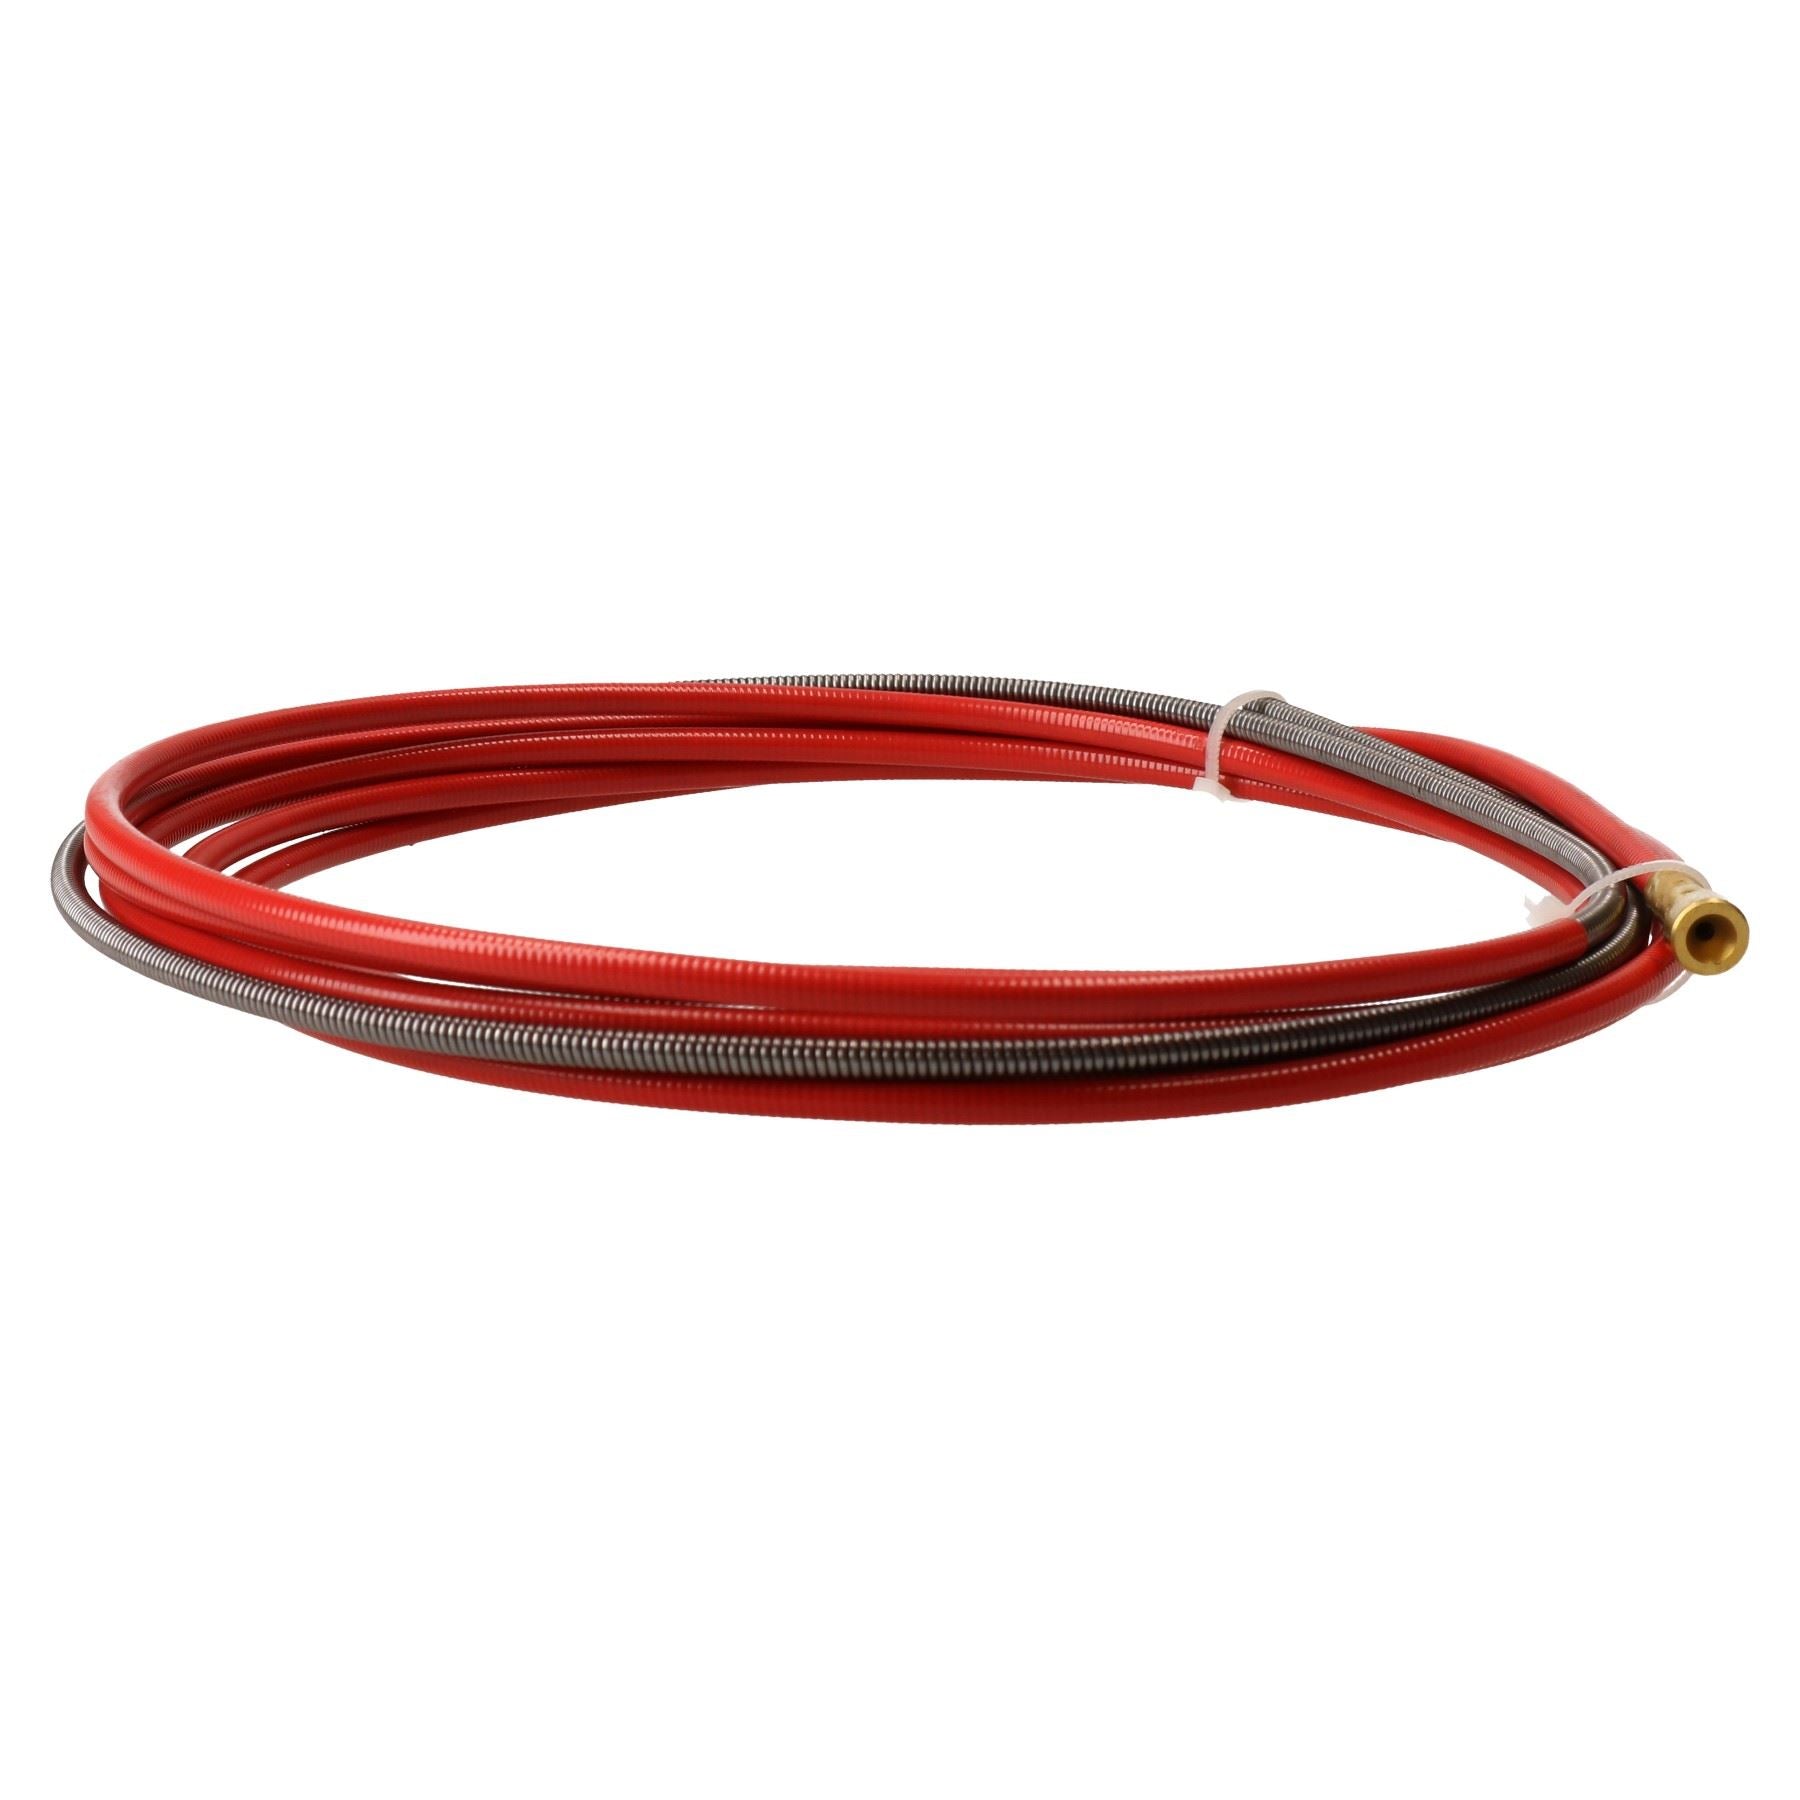 P.C. Liner Wire 1.0 - 1.2mm x 3M Welding Red Steel Plastic Coated MIG Torch